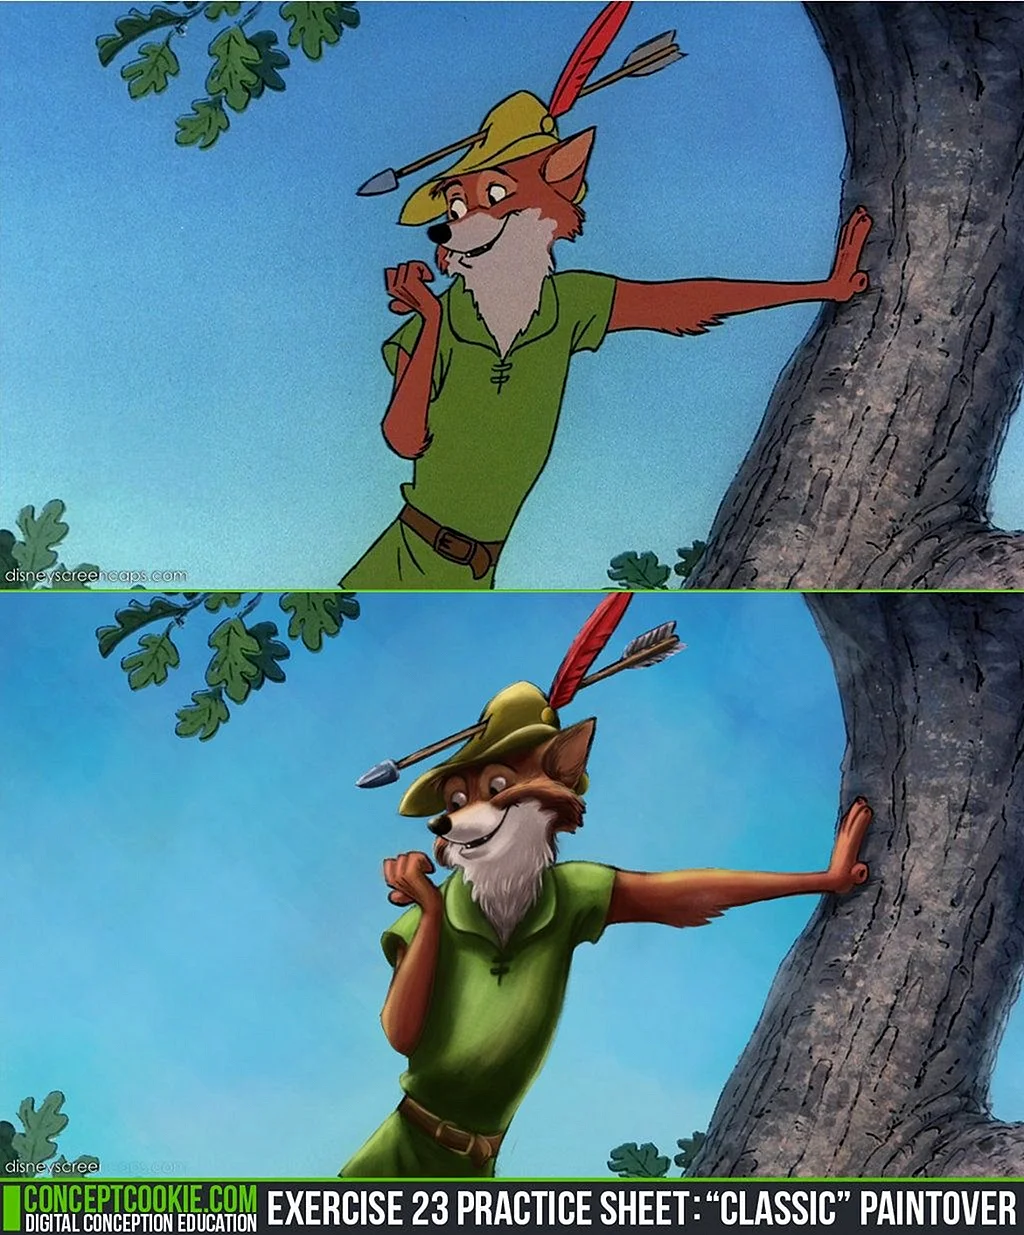 Robin Hood Disney Wallpaper